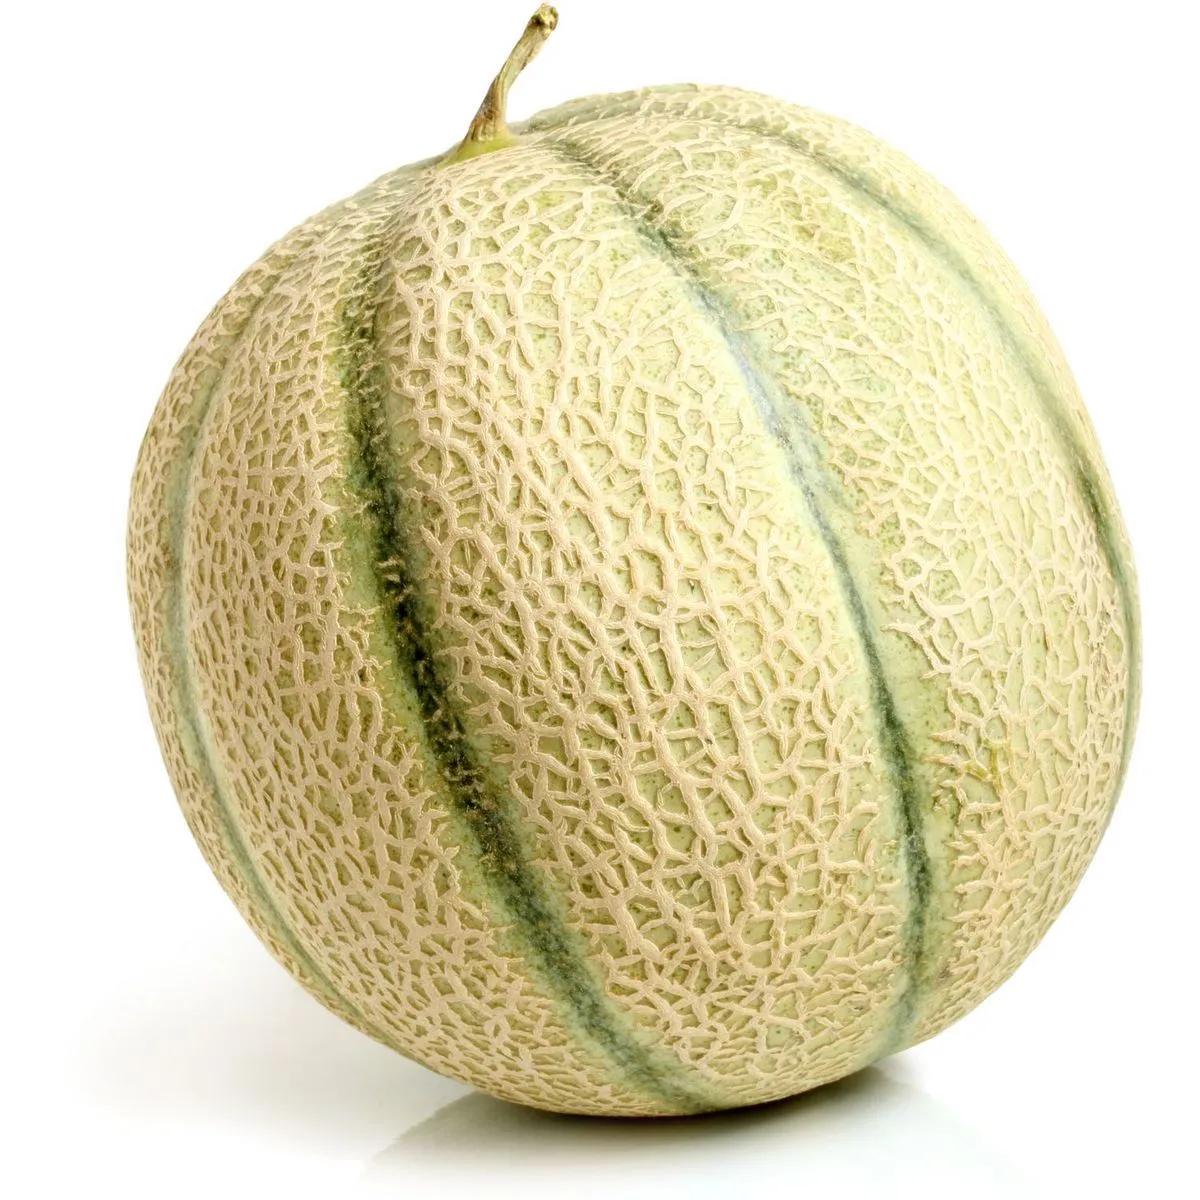 melon bio